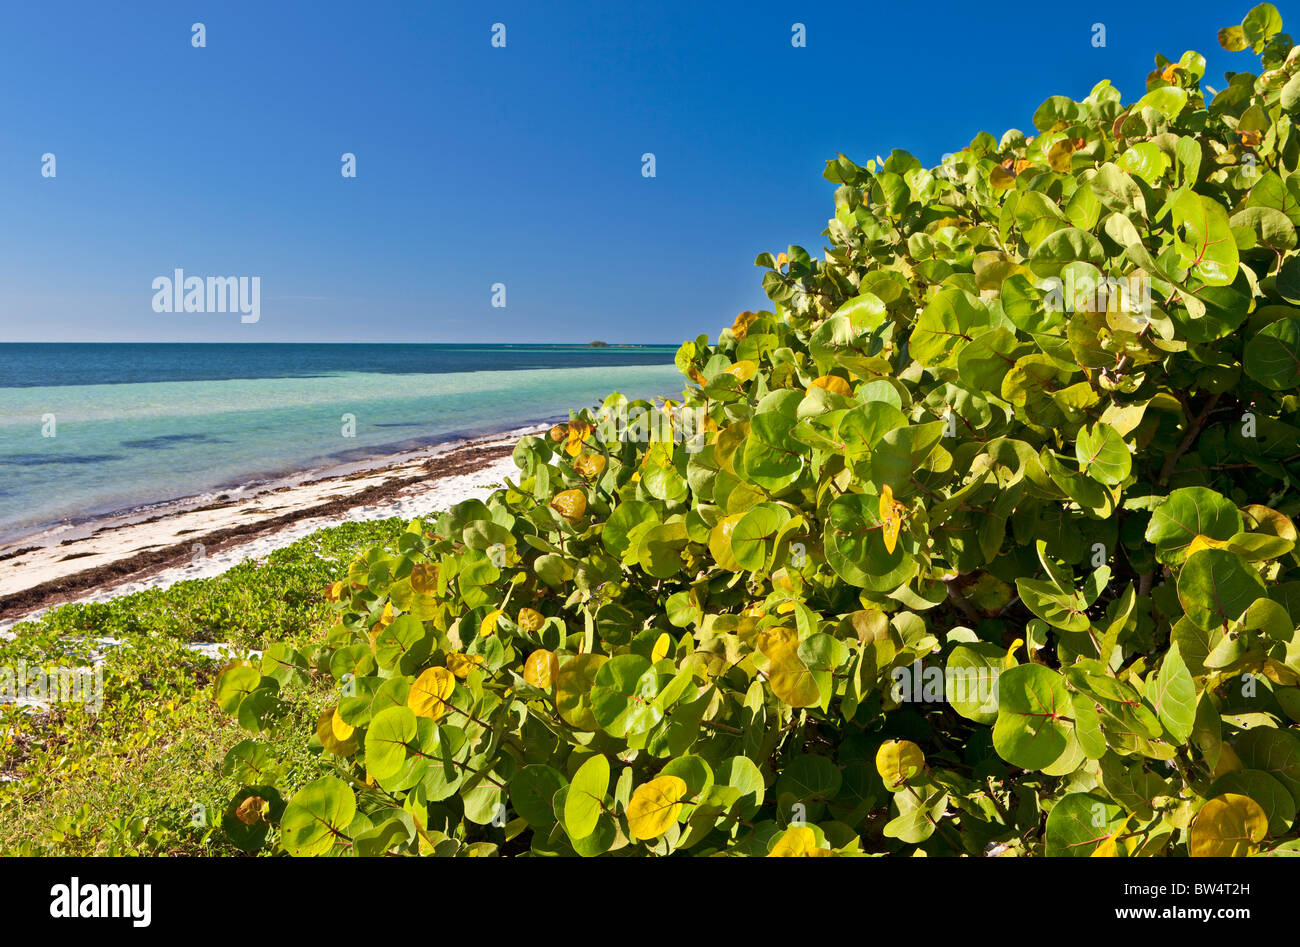 Beach Dunes, Sea Grapes, Coccoloba uvifera, Bahia Honda State Park, Florida Keys, Florida Stock Photo